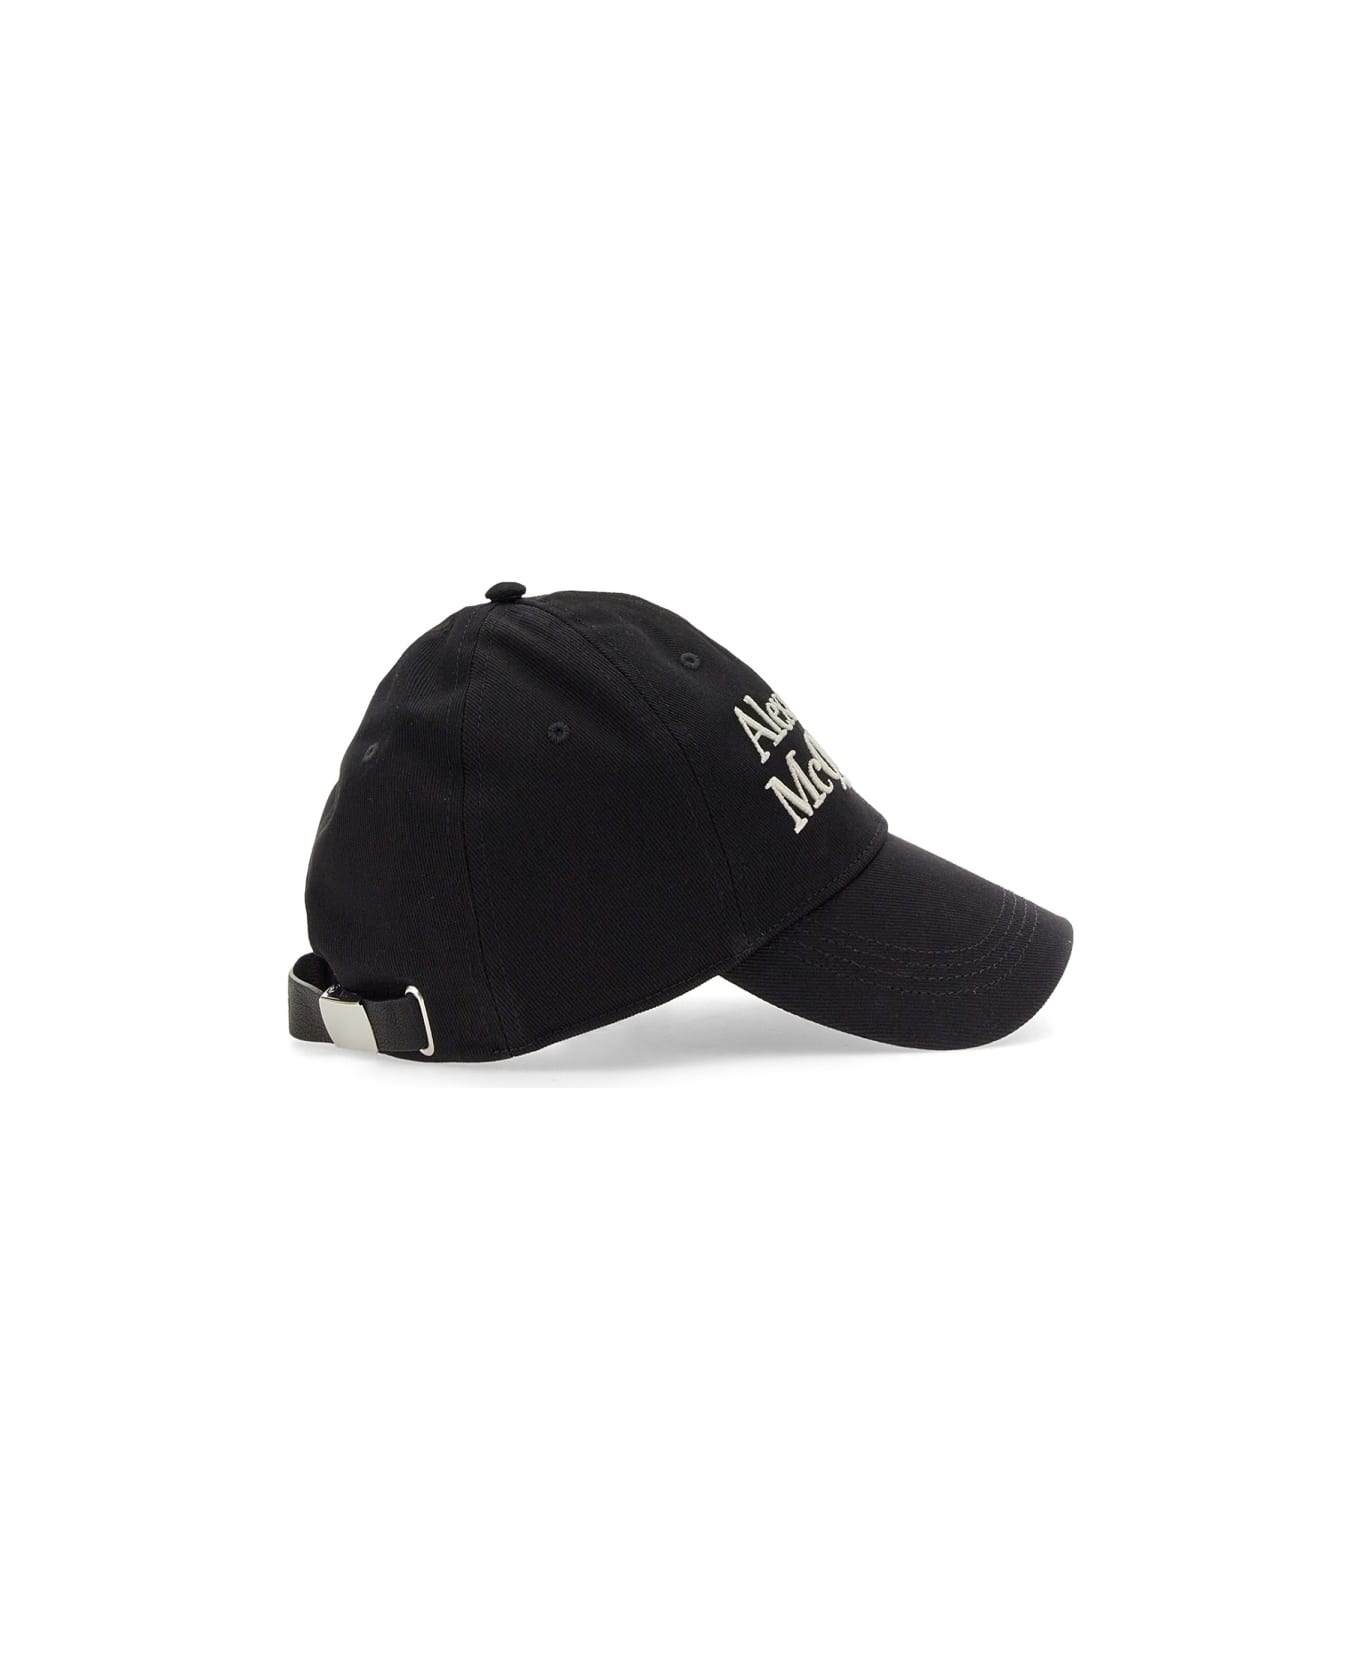 Alexander McQueen Baseball Cap - BLACK